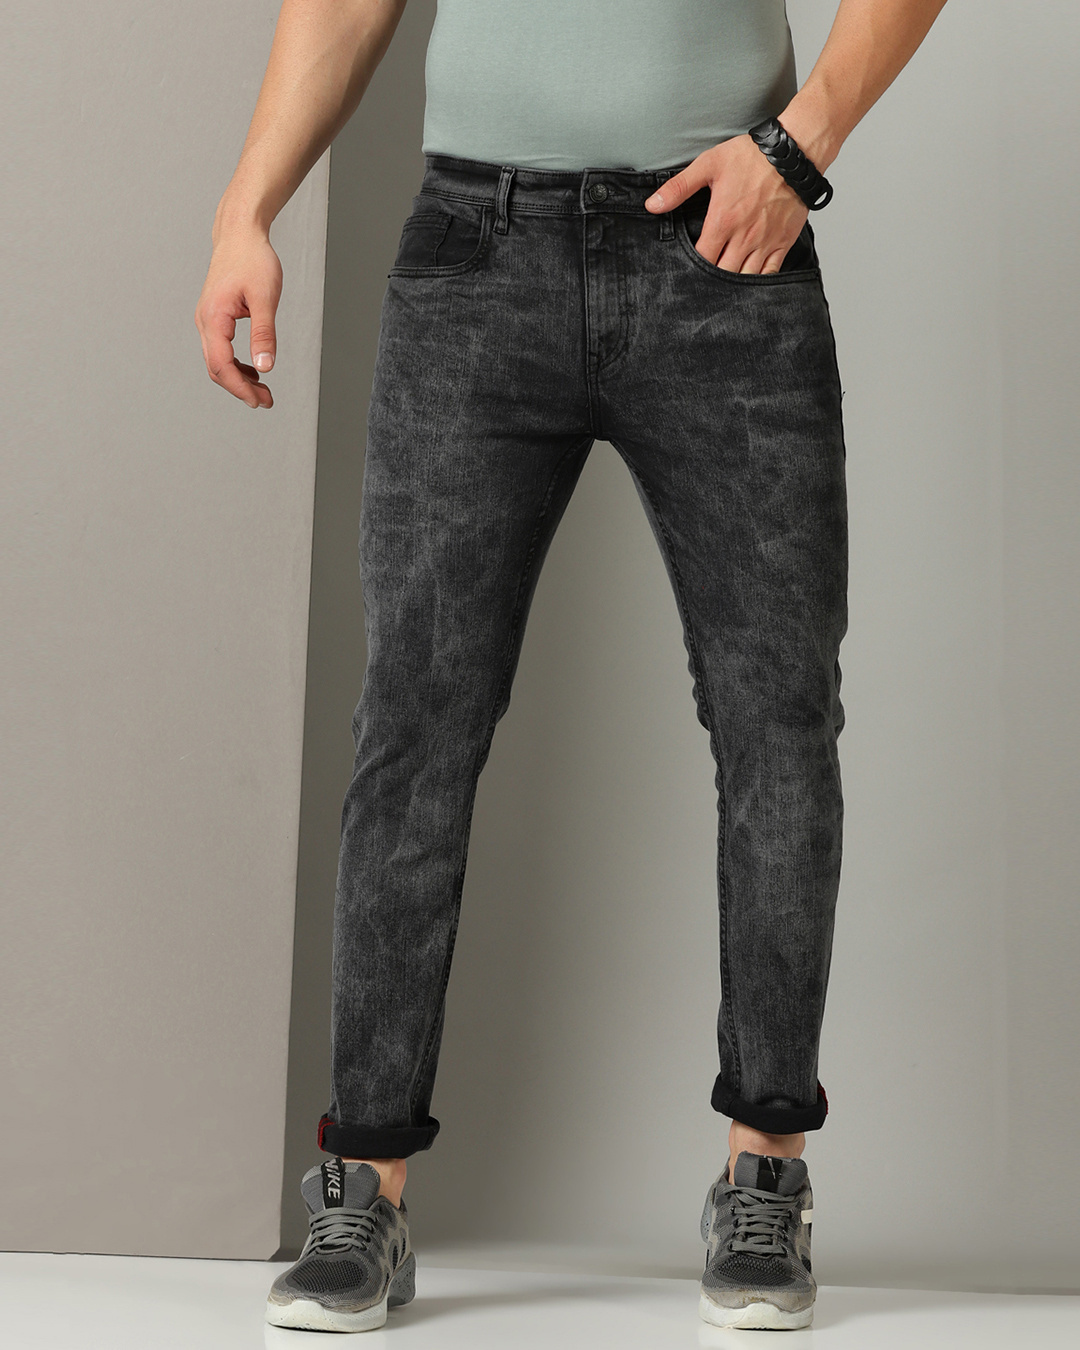 Buy Men's Black Washed Skinny Fit Jeans Online at Bewakoof